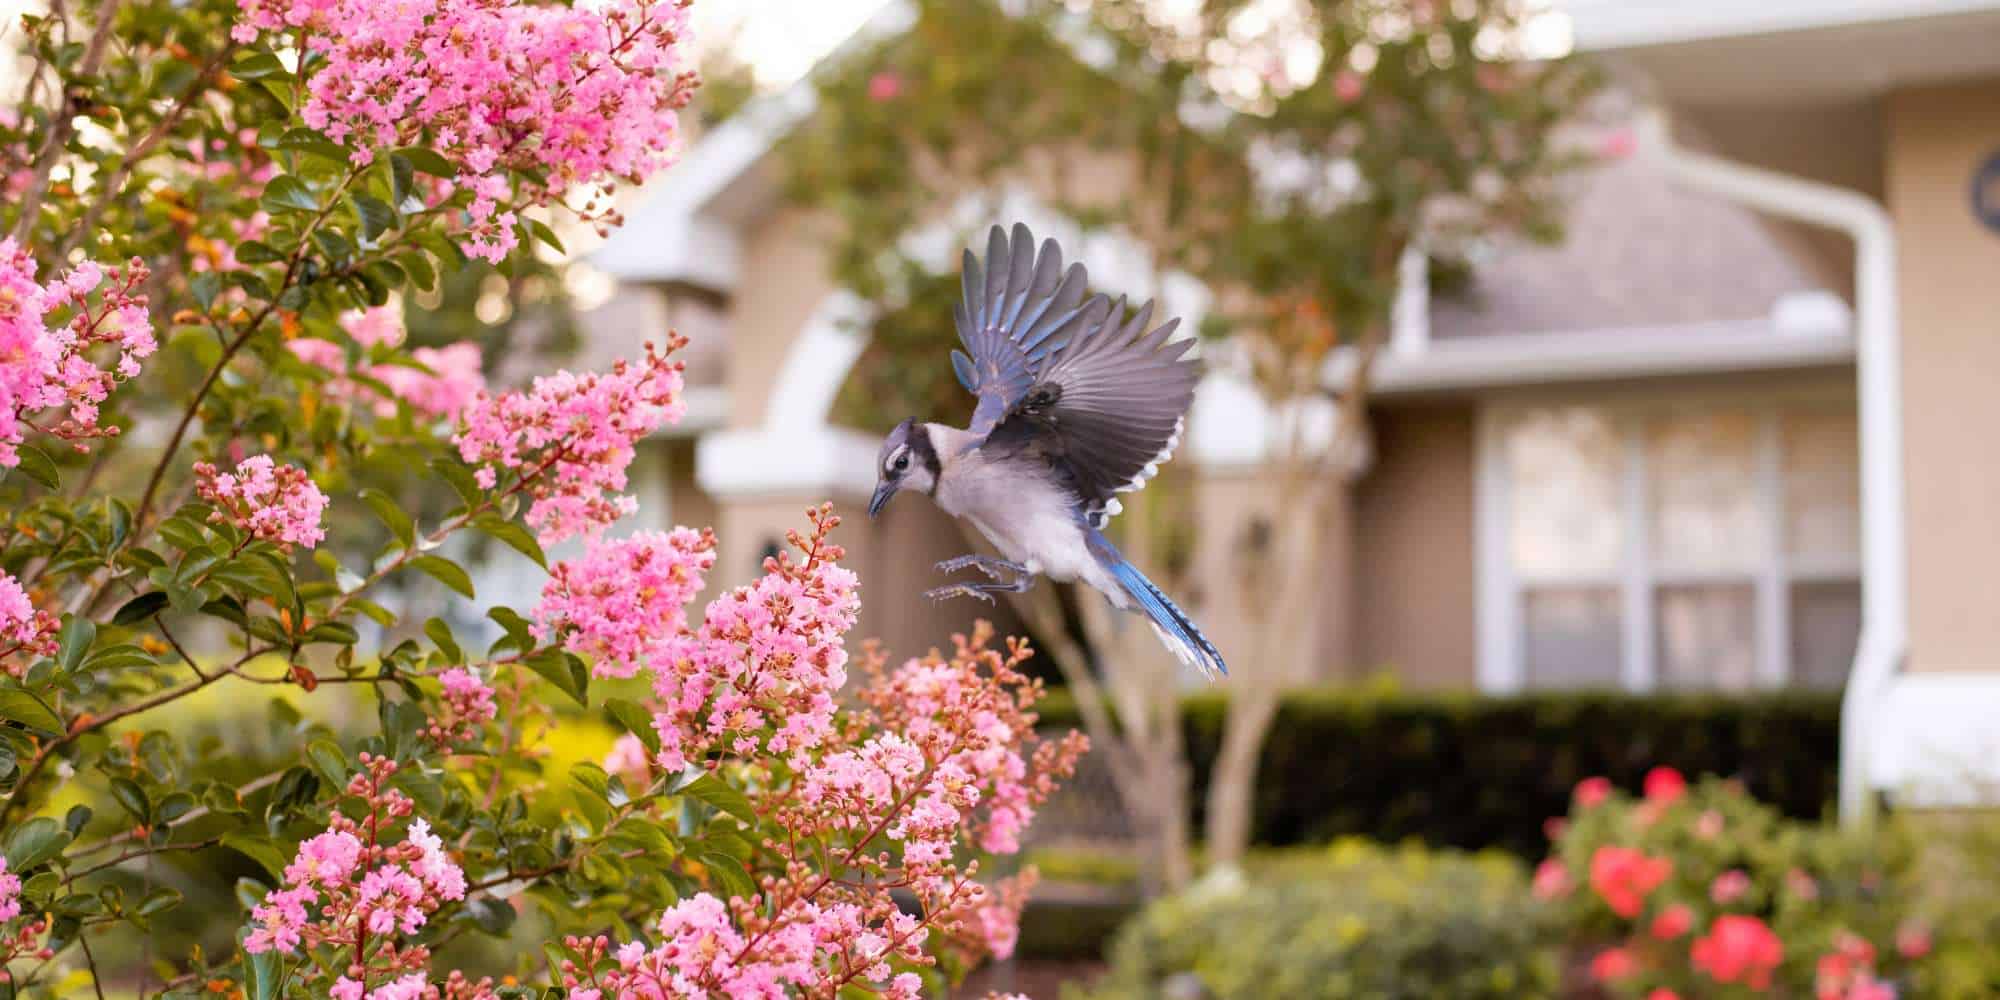 How to Attract Birds in Your Florida Garden